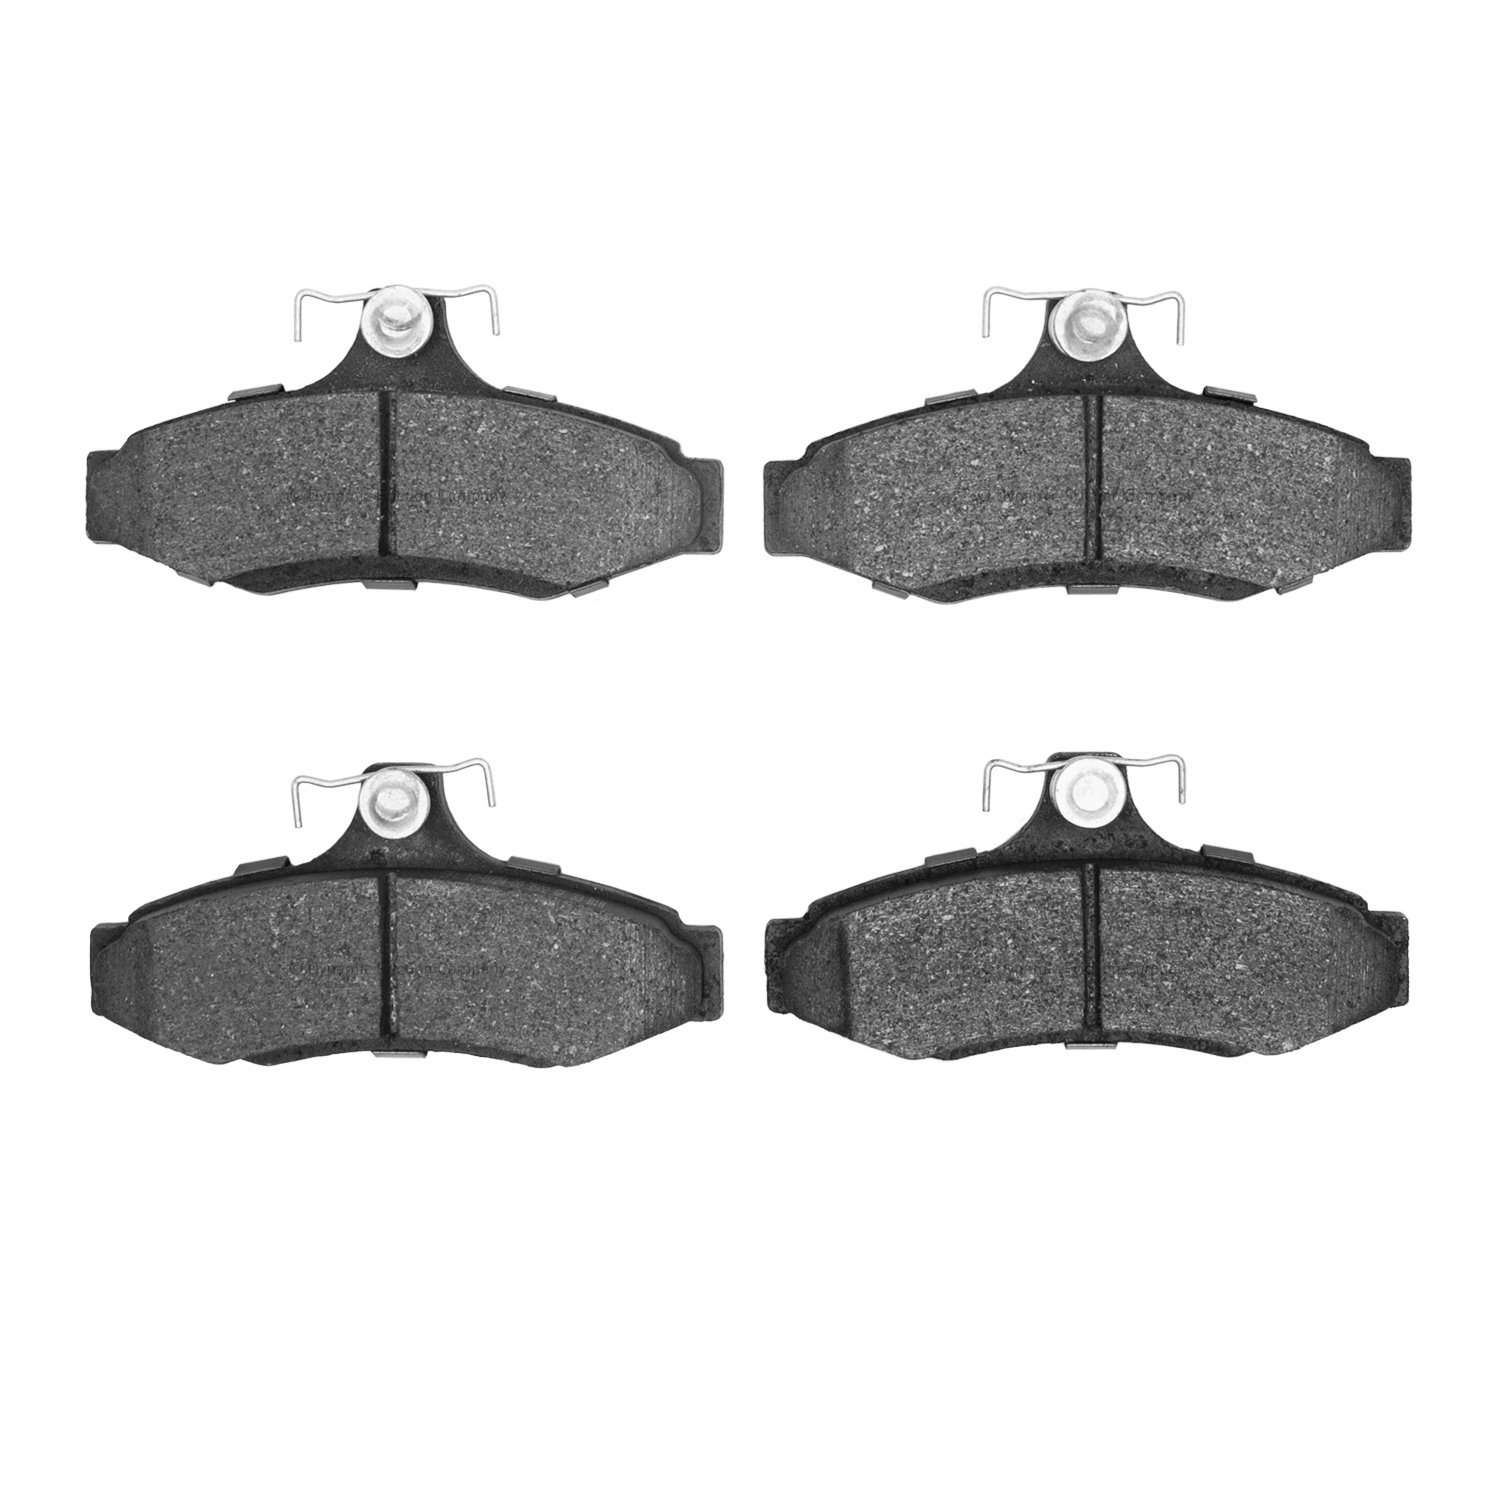 1310-0724-00 3000-Series Ceramic Brake Pads, 1997-2004 Multiple Makes/Models, Position: Rear